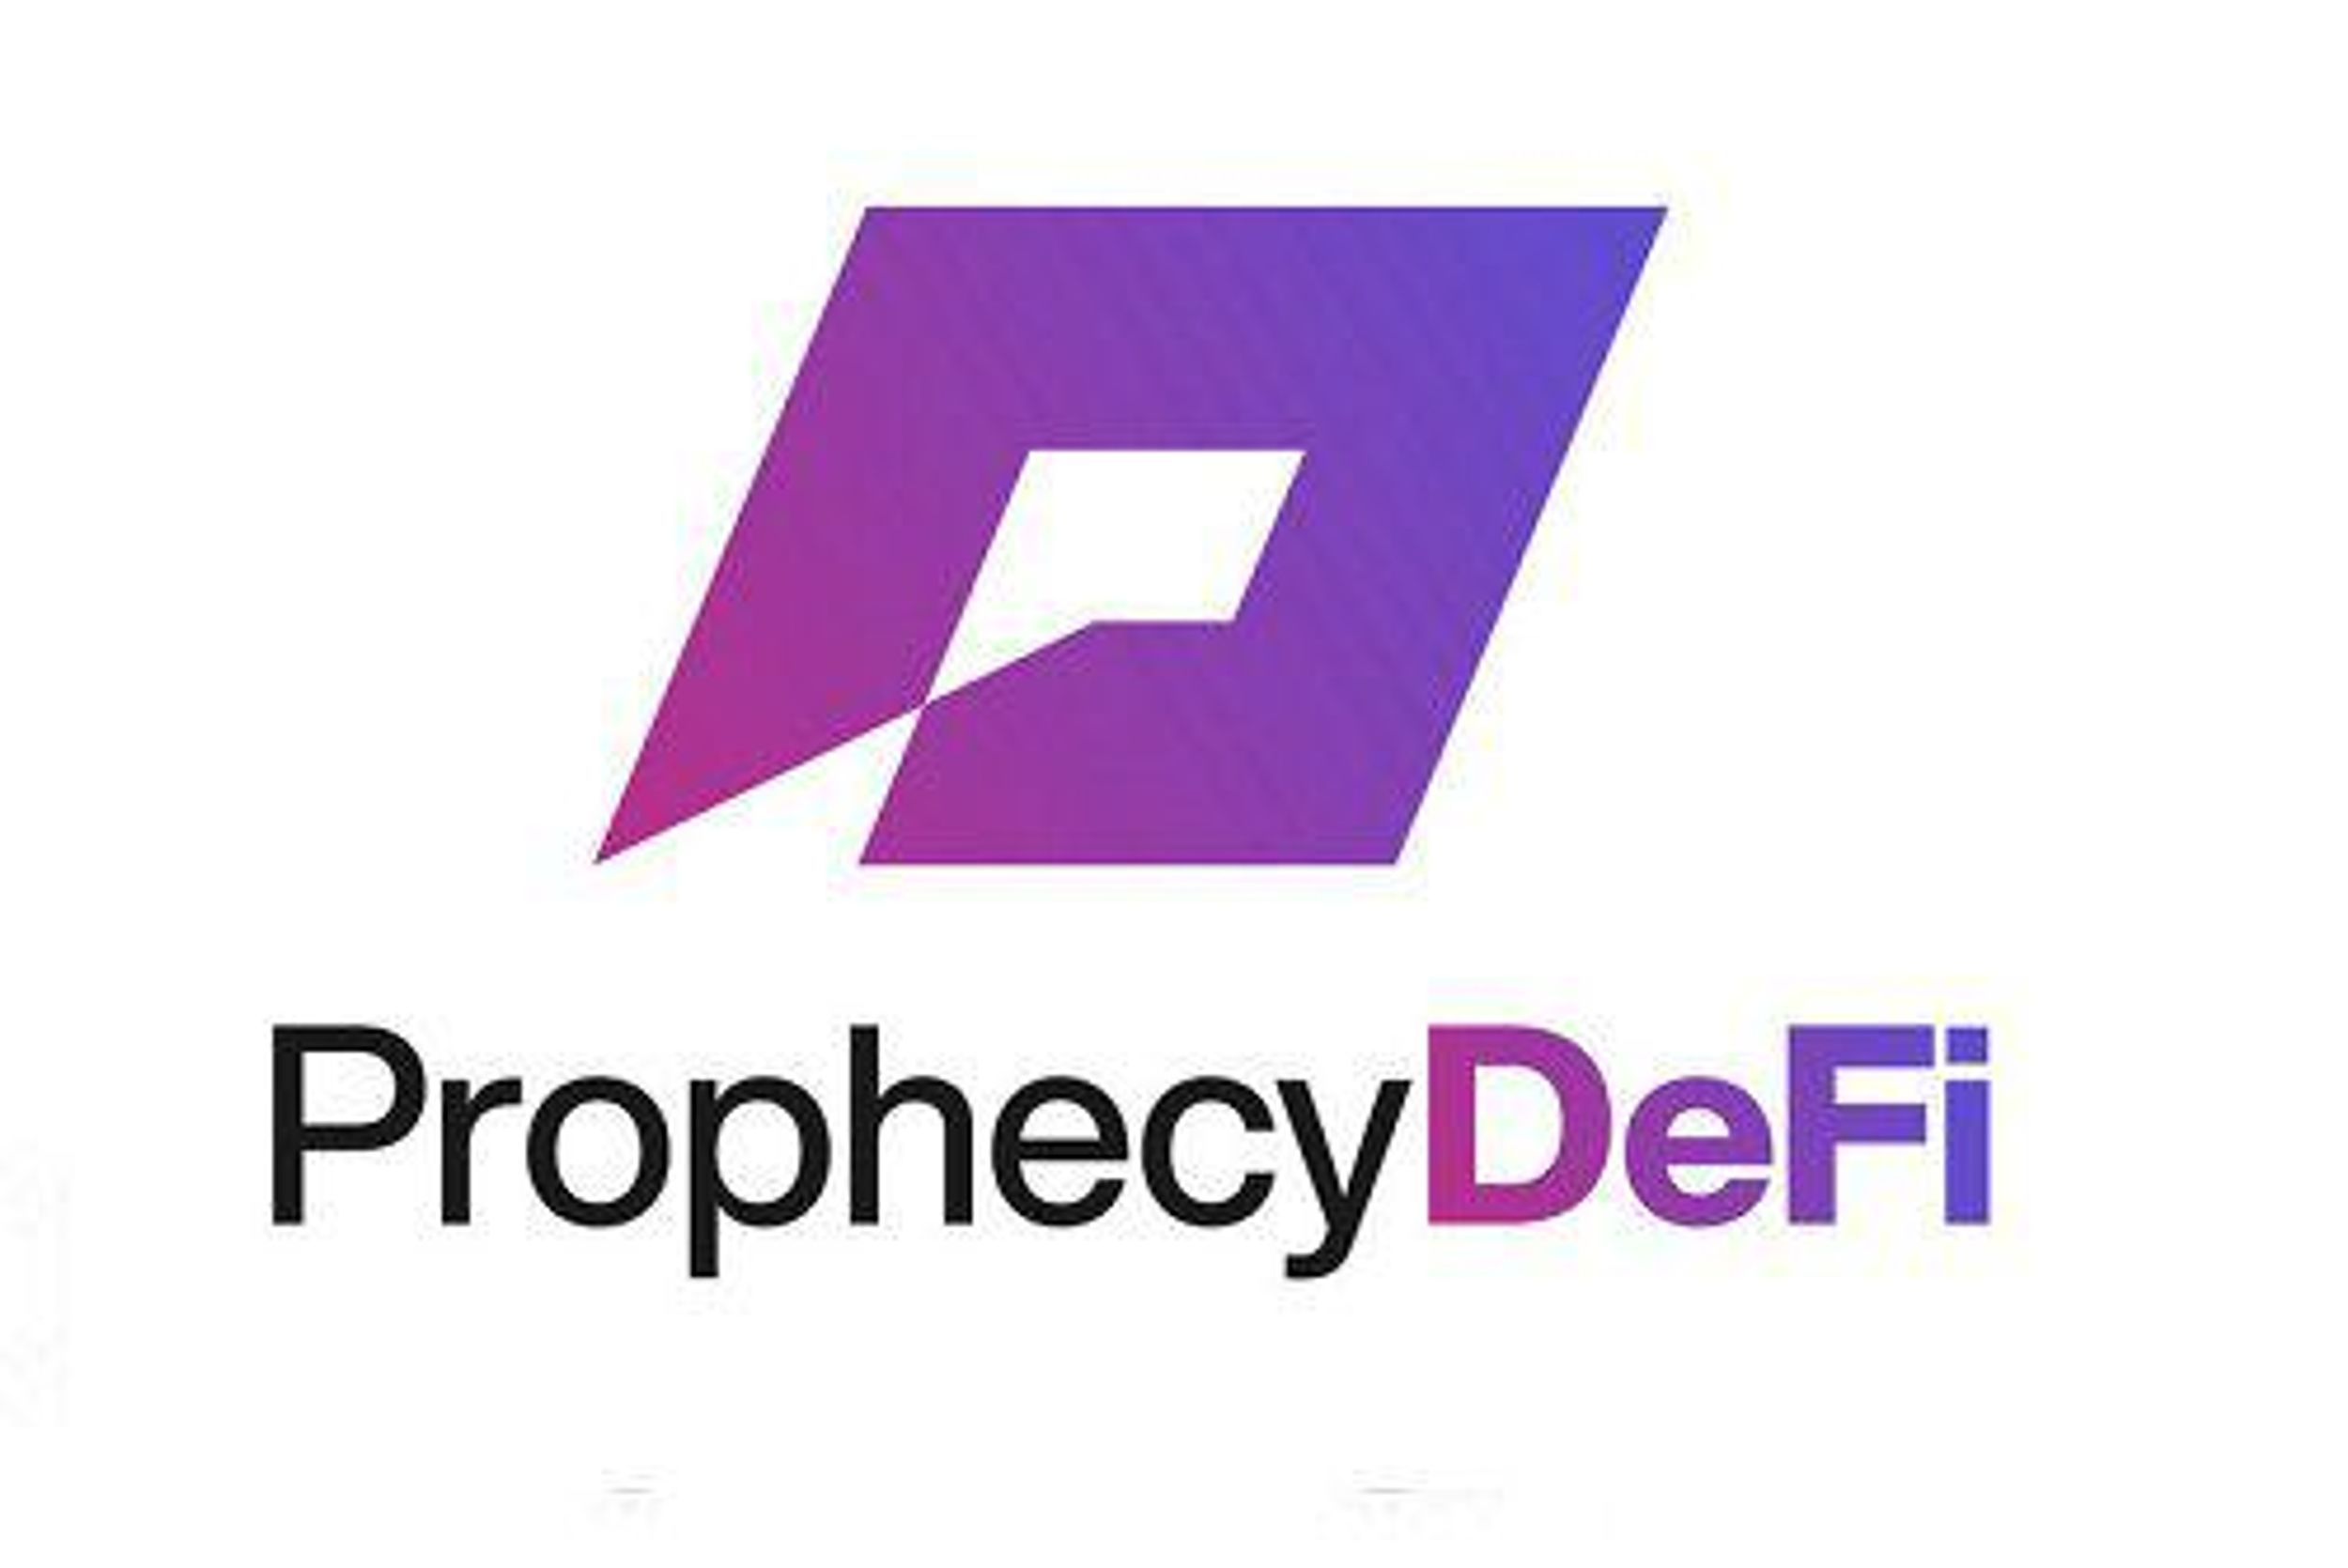 Prophecy Defi